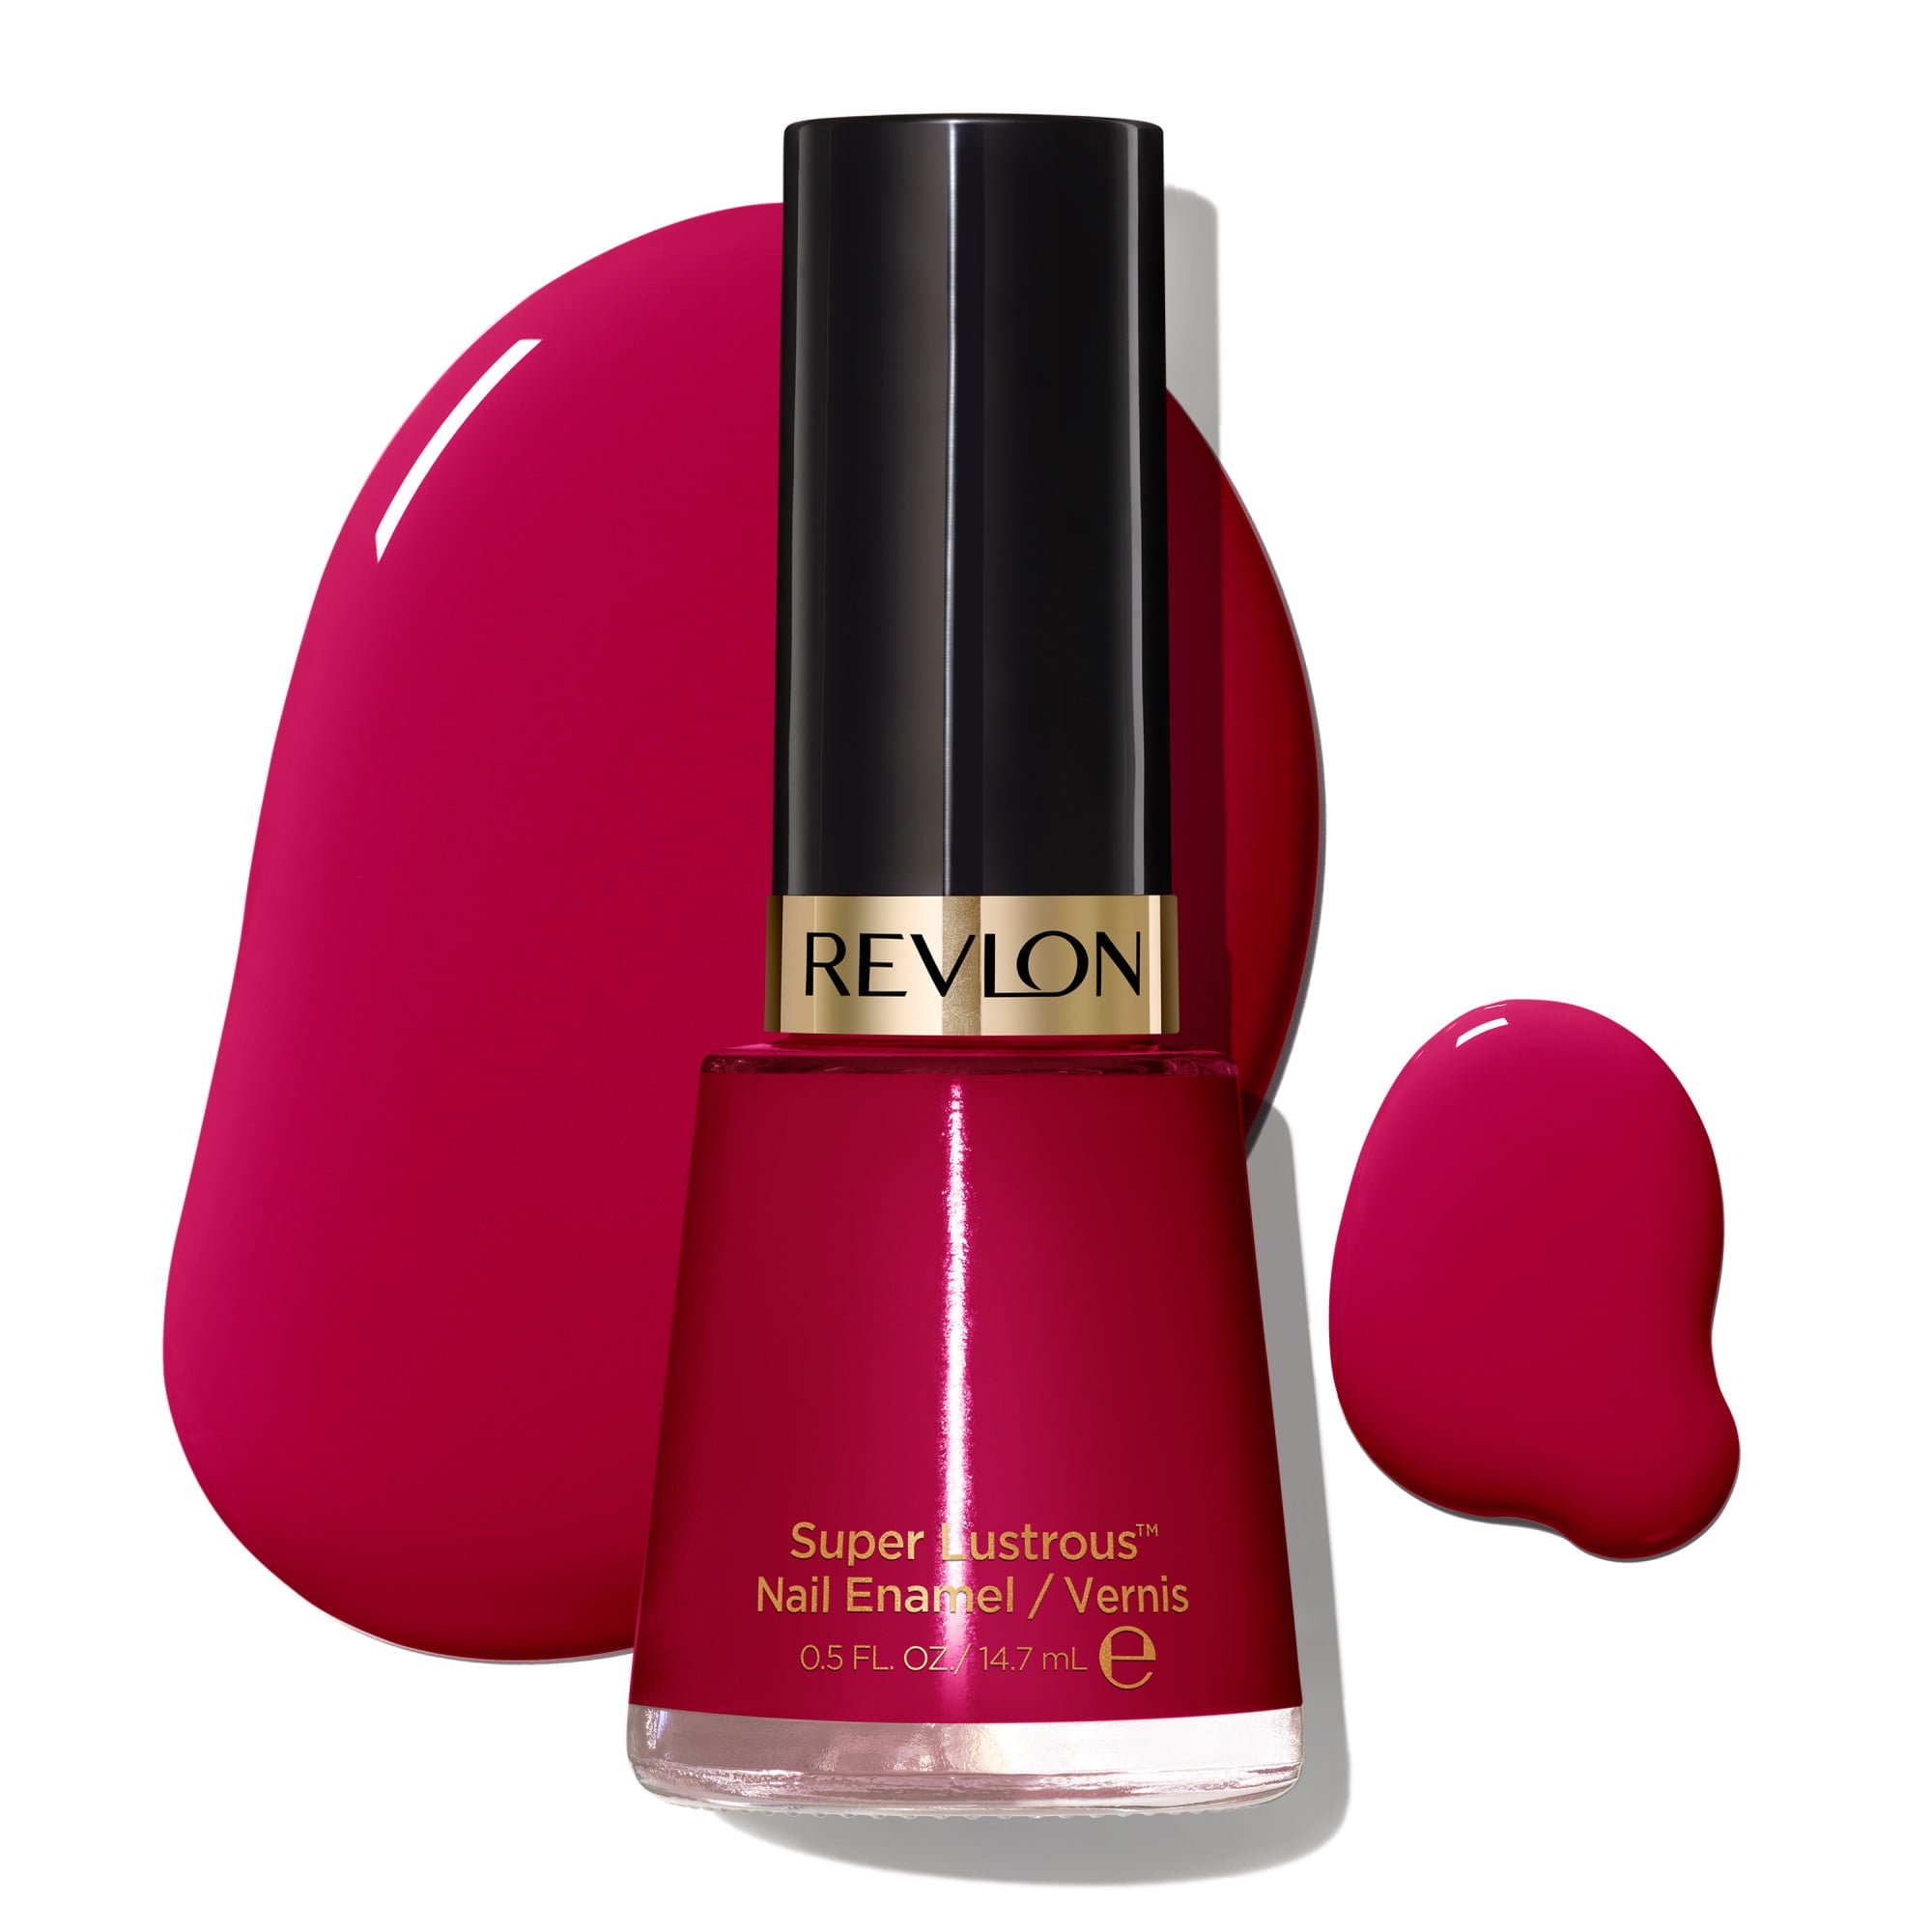 Revlon Parfumerie Scented Nail Enamel – The Pink Millennial